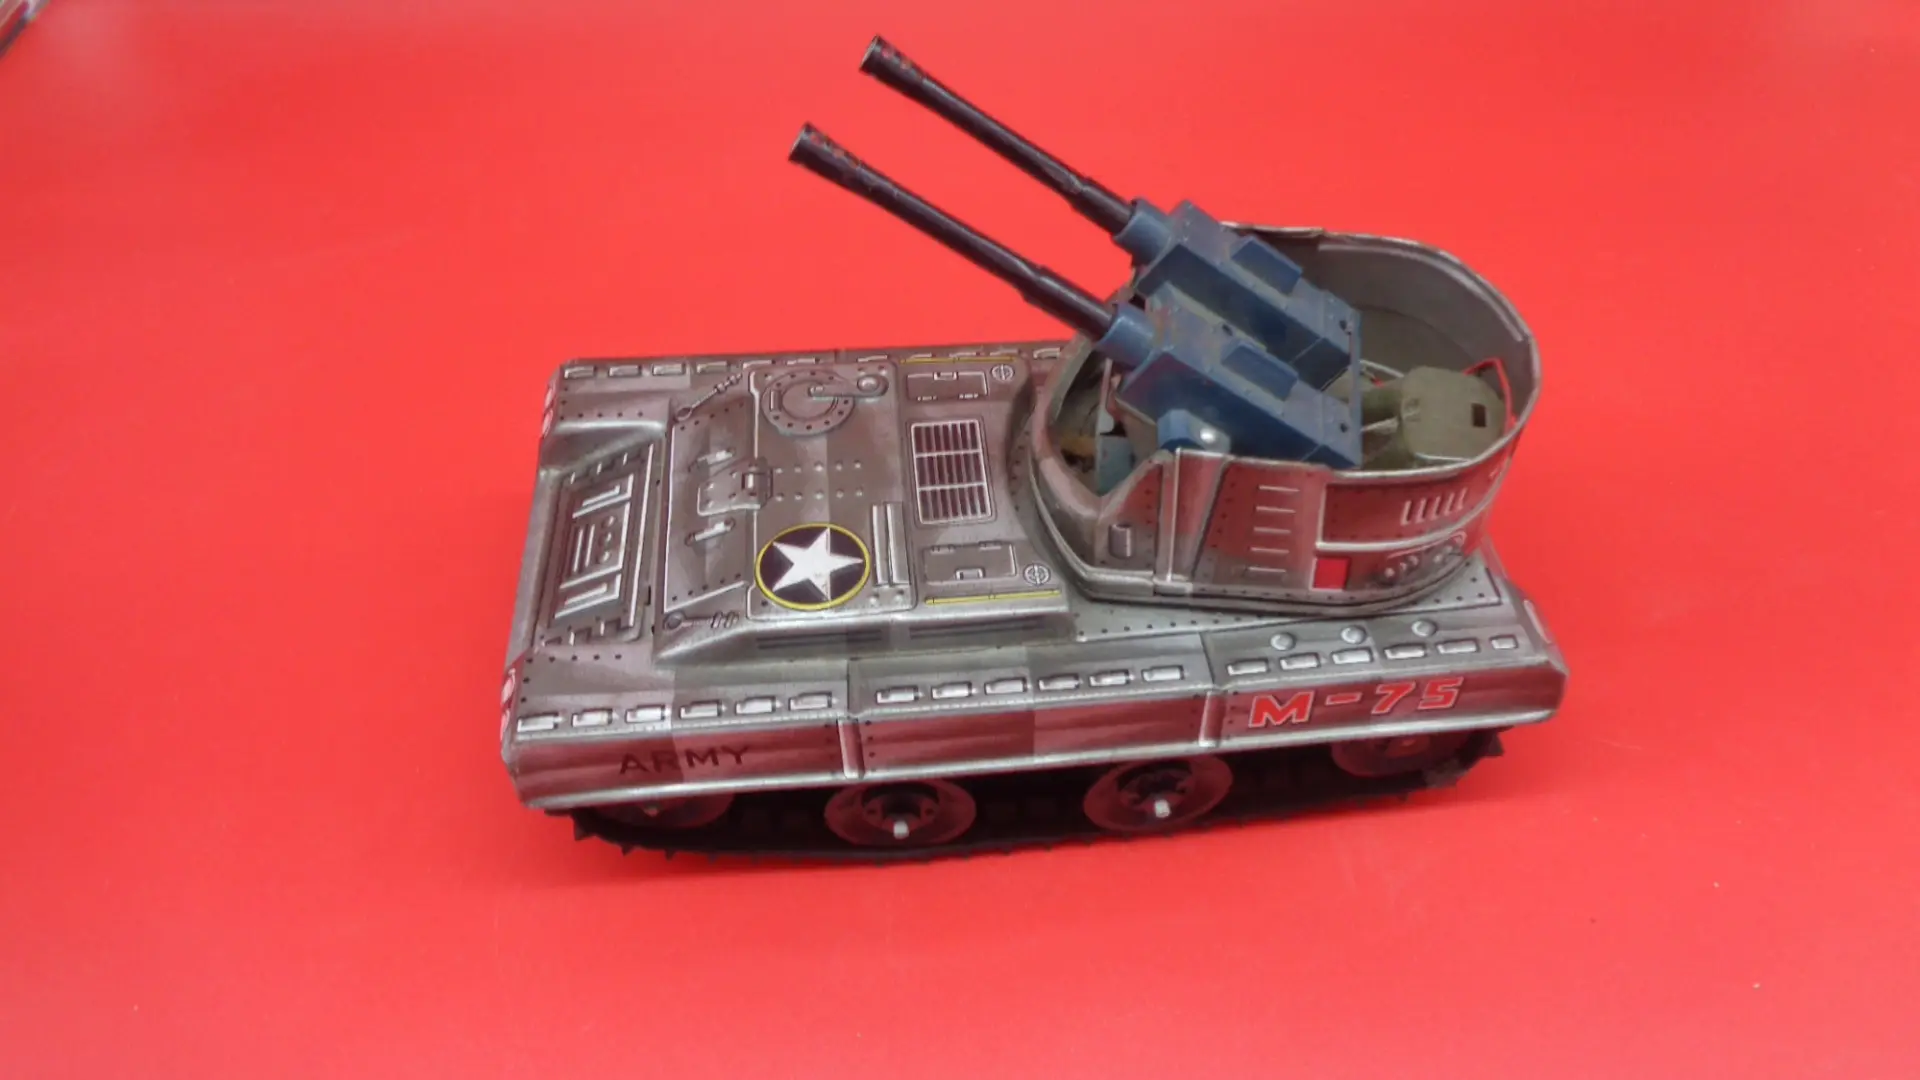 Vintage toy M-75 tank